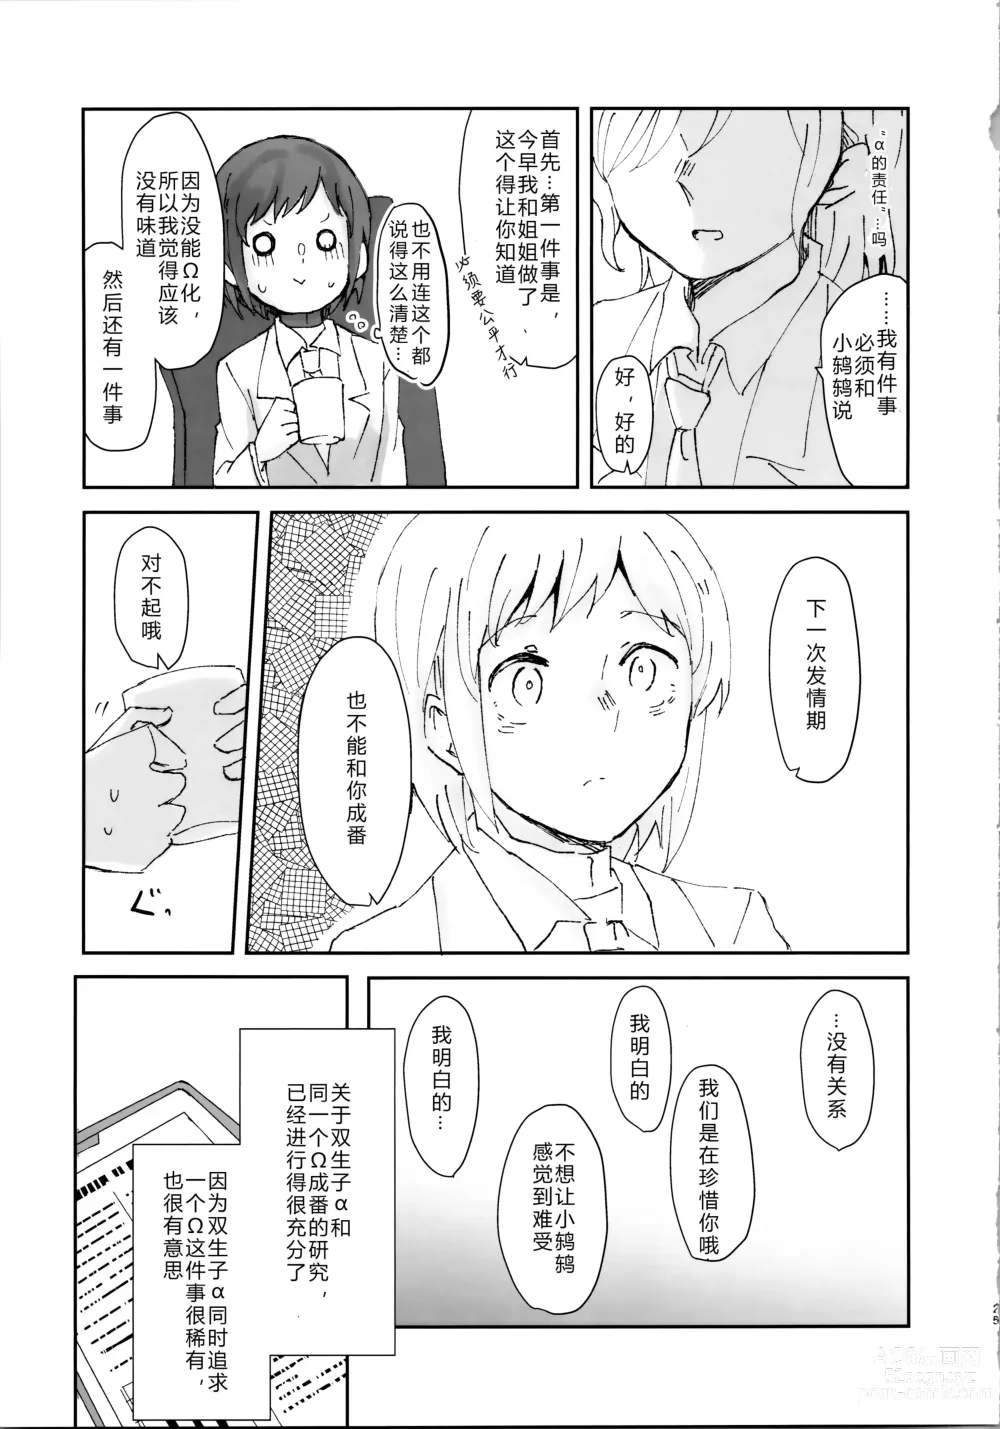 Page 25 of doujinshi 只要爱着彼此就好